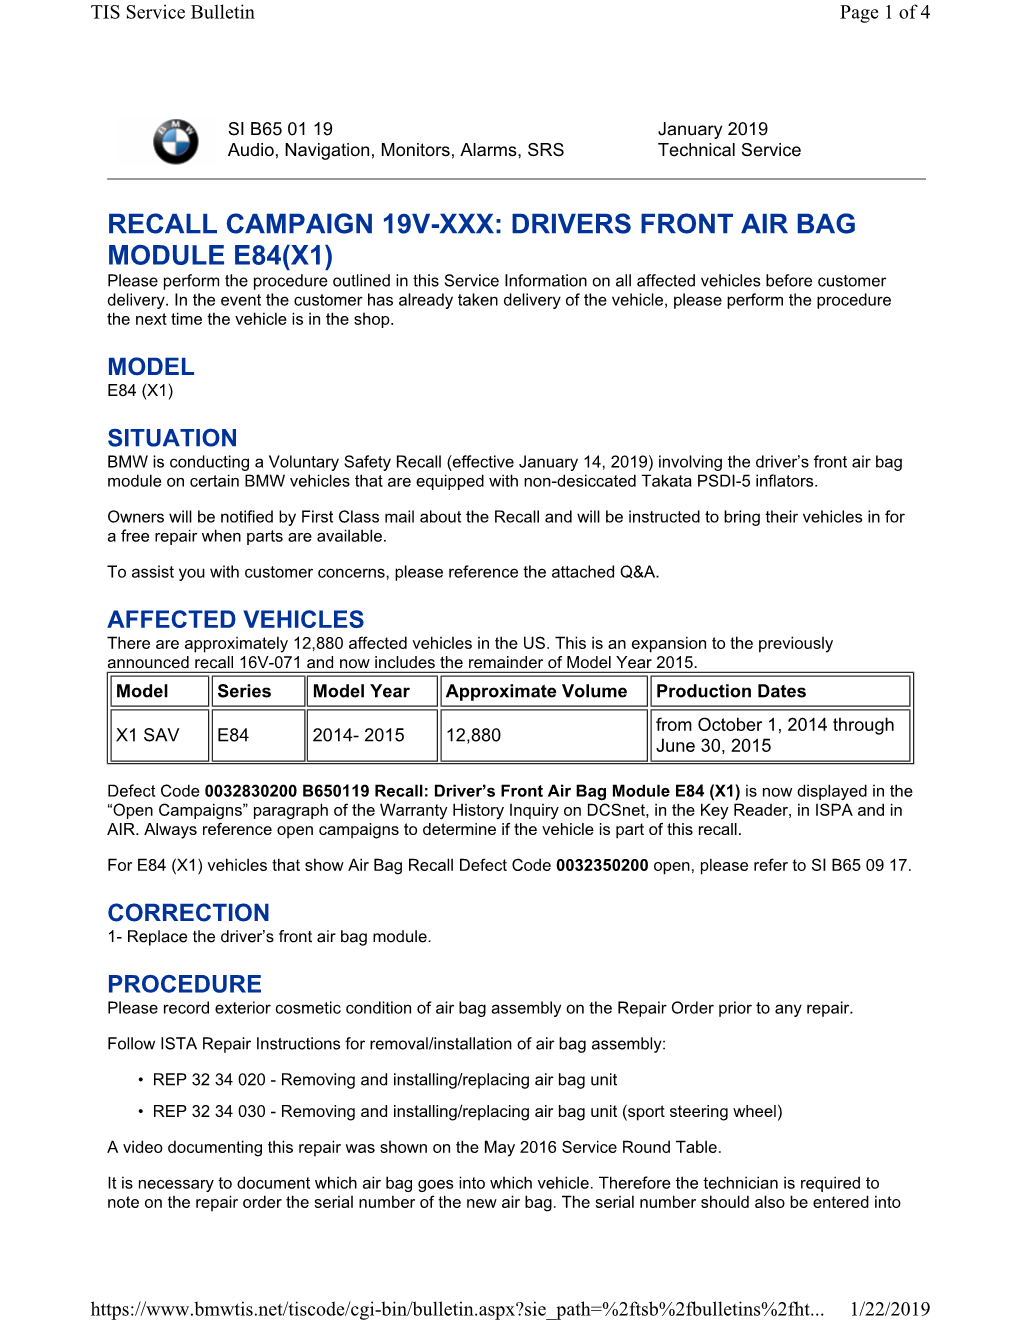 Recall Campaign 19V-Xxx: Drivers Front Air Bag